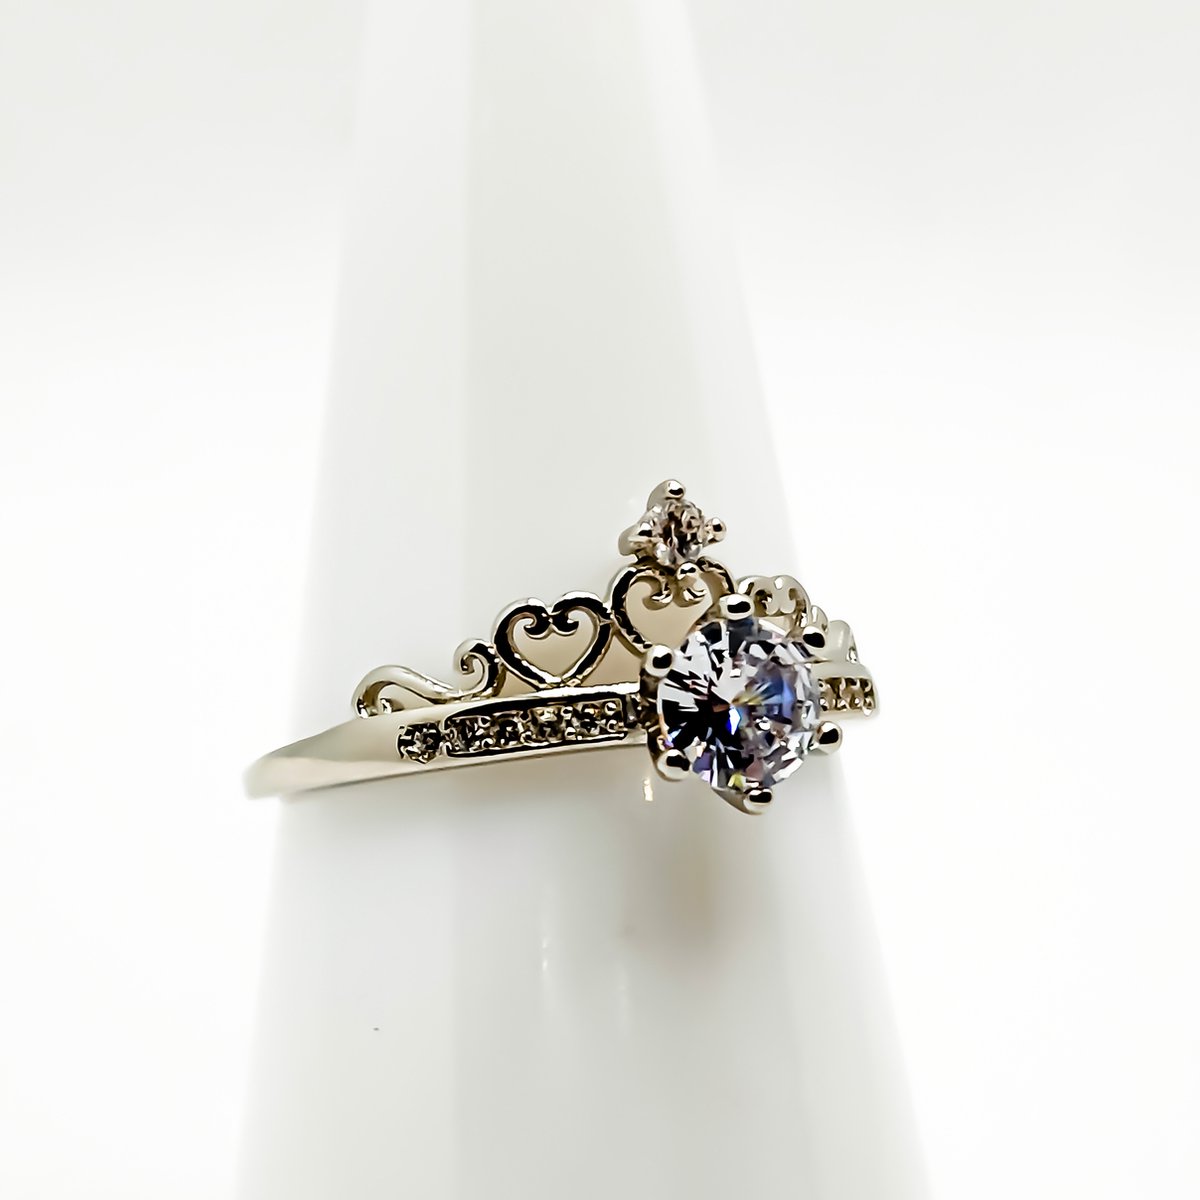 CouplesPicks princessen ring | belofte ring | 925 zilver | dames ring | zilveren ring | verstelbare ring | verlovingsring | vriendschapsring | cadeau voor vriendin